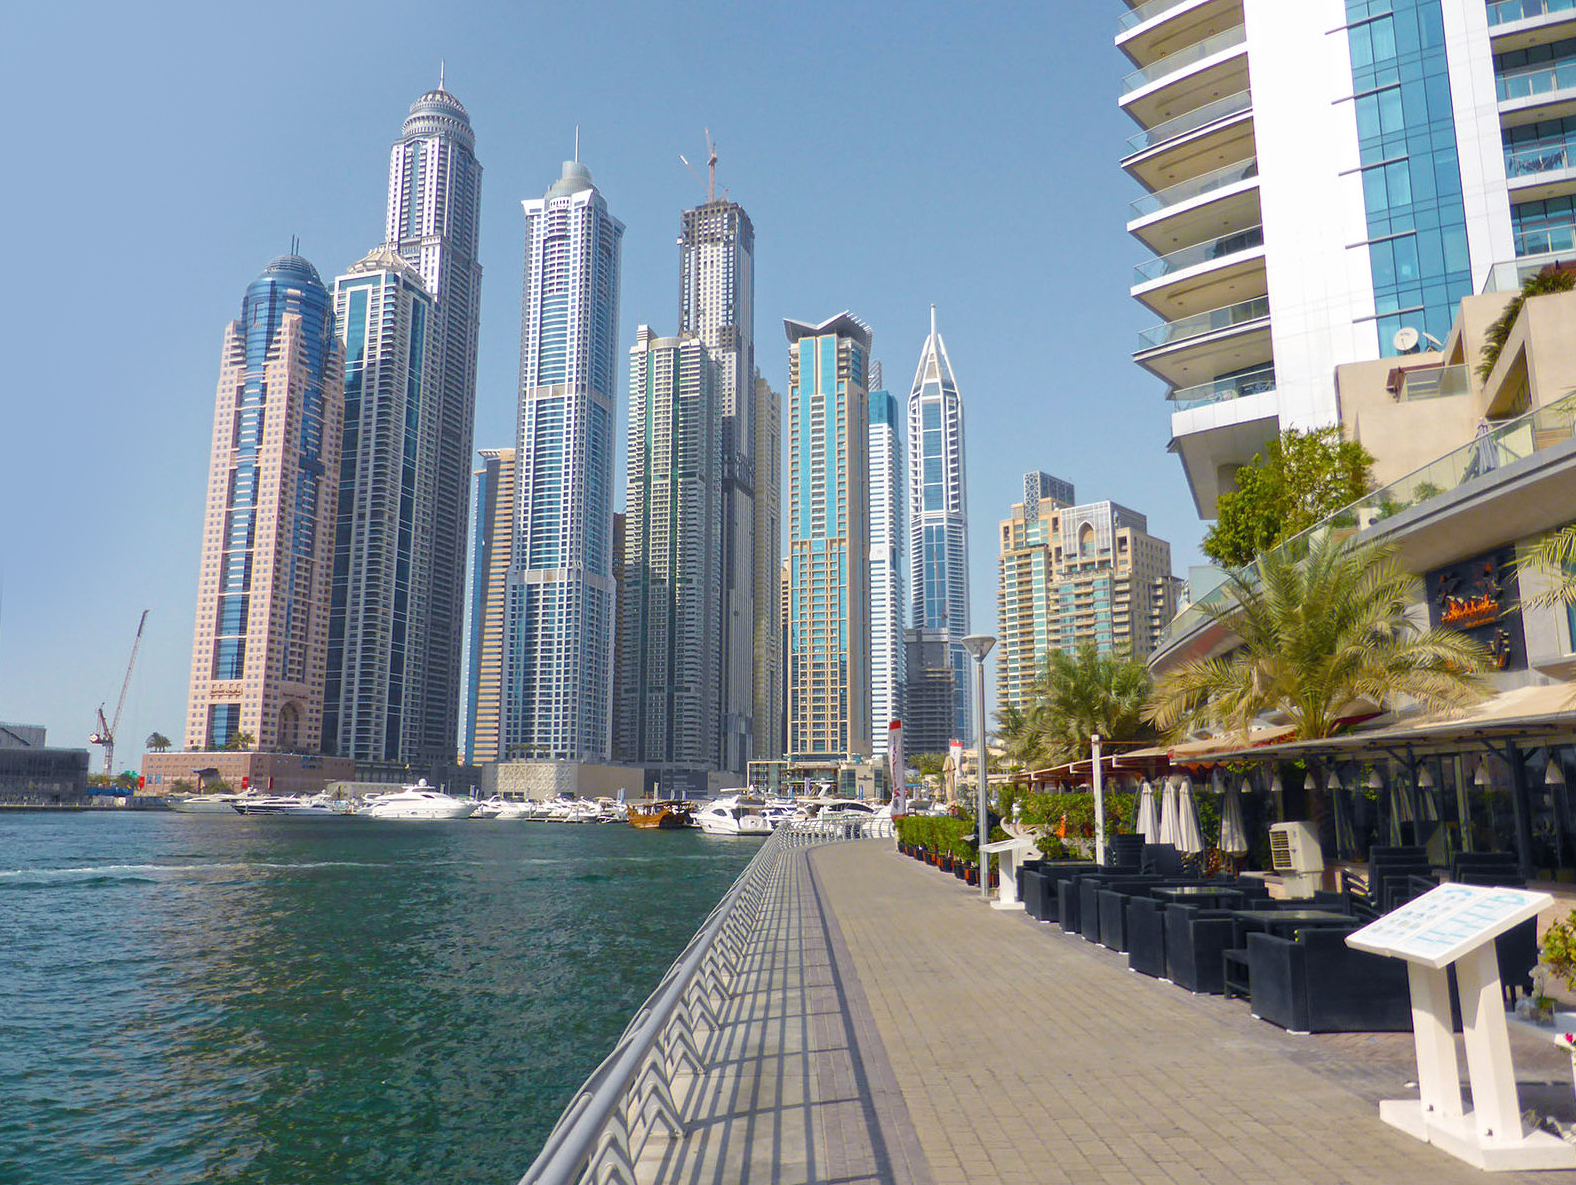 Khu phố đi bộ Marina - Dubai Marina Walk | Yeudulich